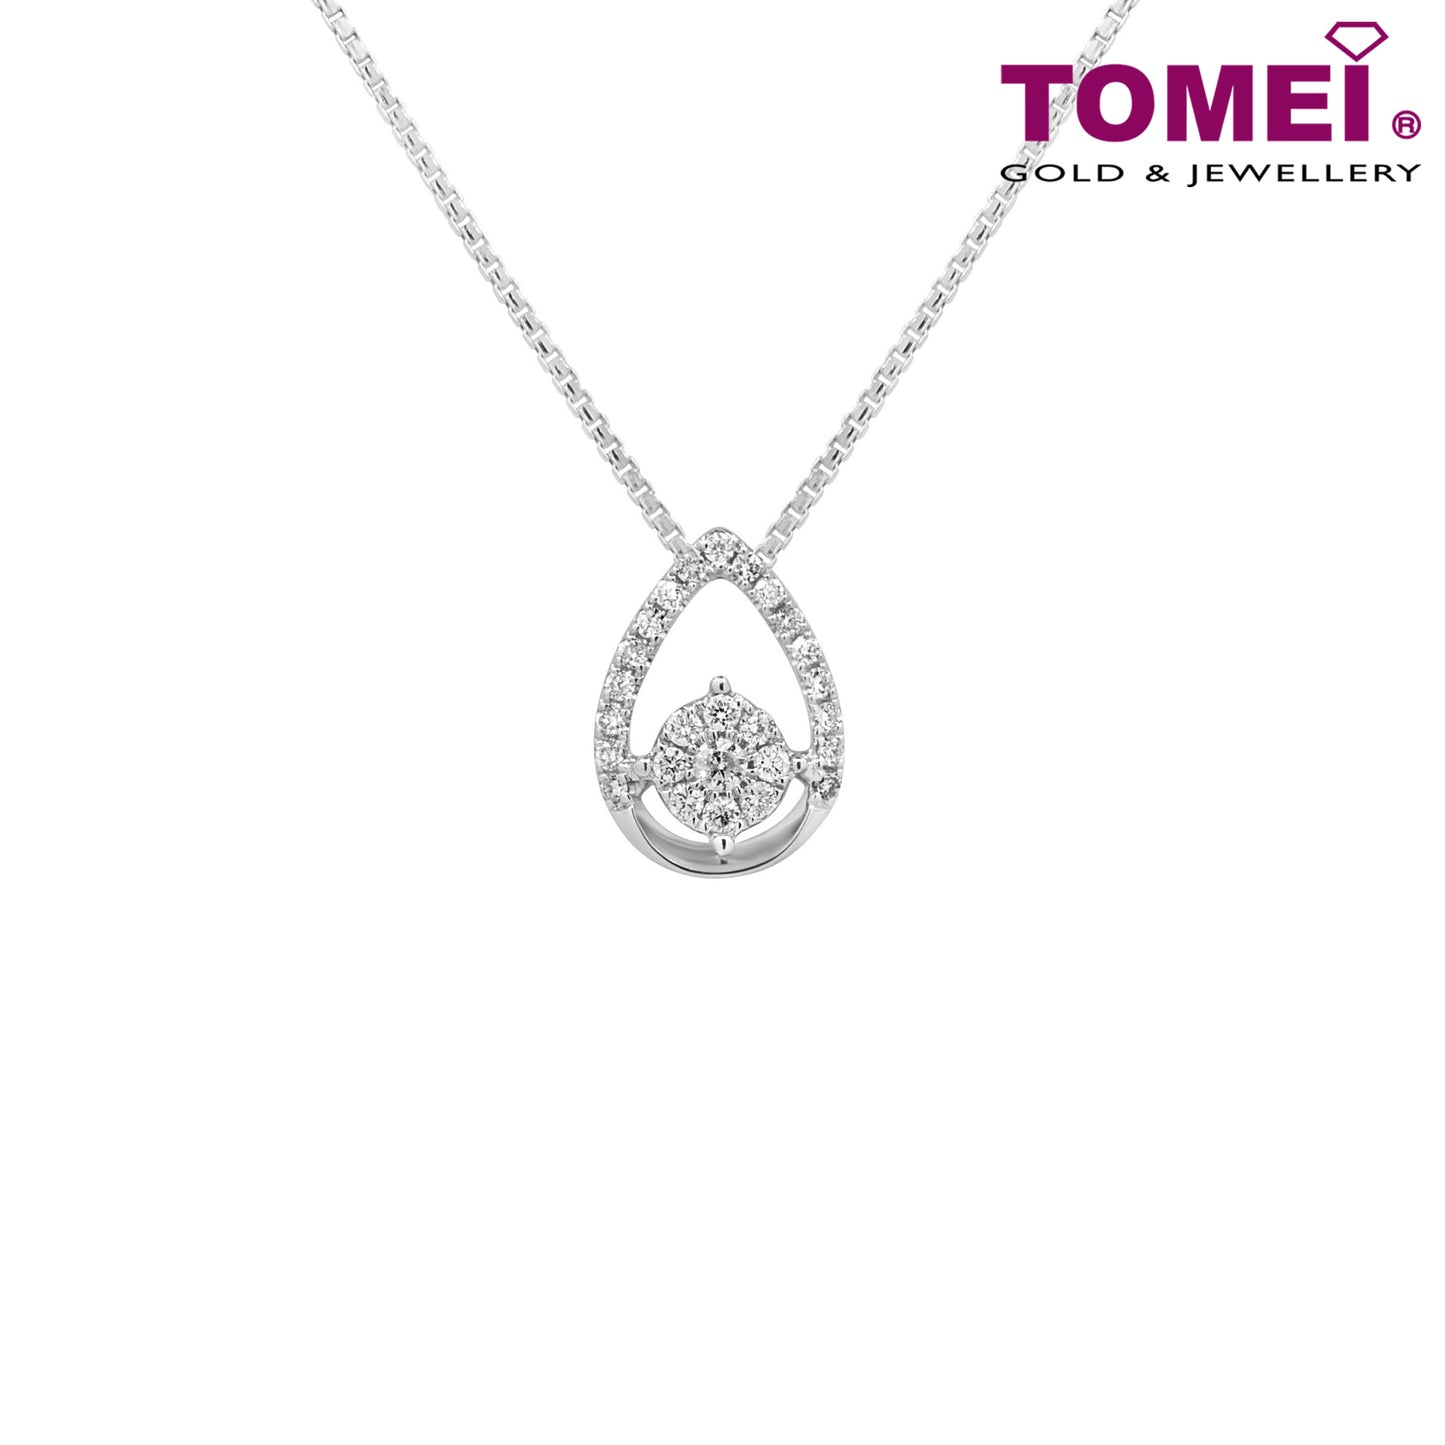 Teardrop Diamond Pendant | Tomei White Gold 375 (9K) with Chain (P5208)